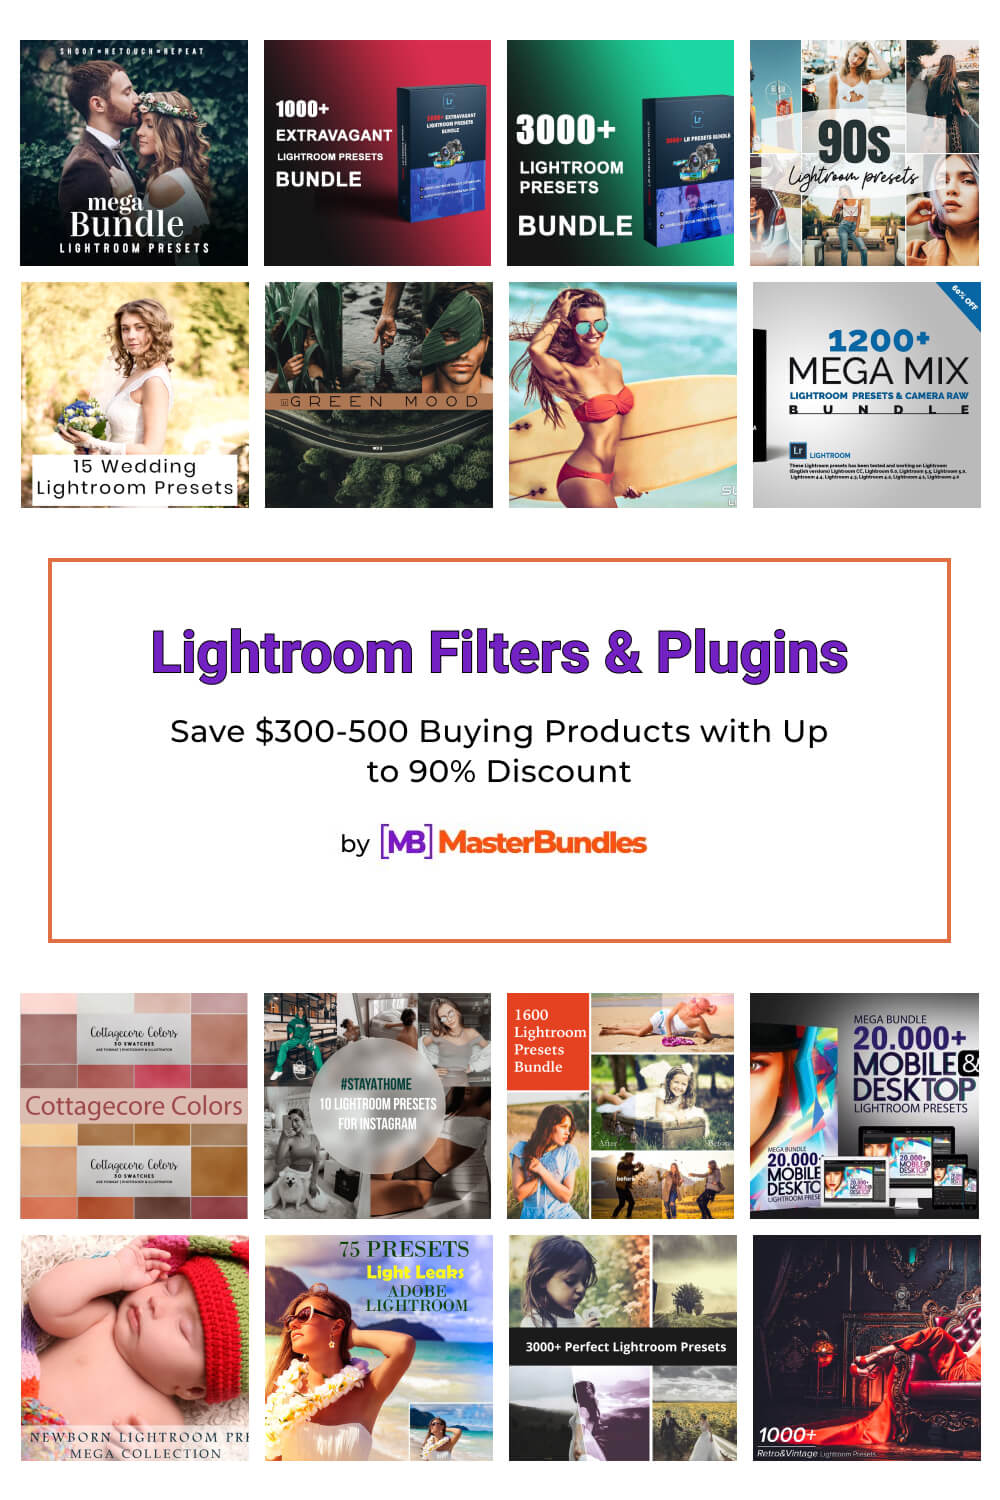 lightroom filters plugins pinterest image.